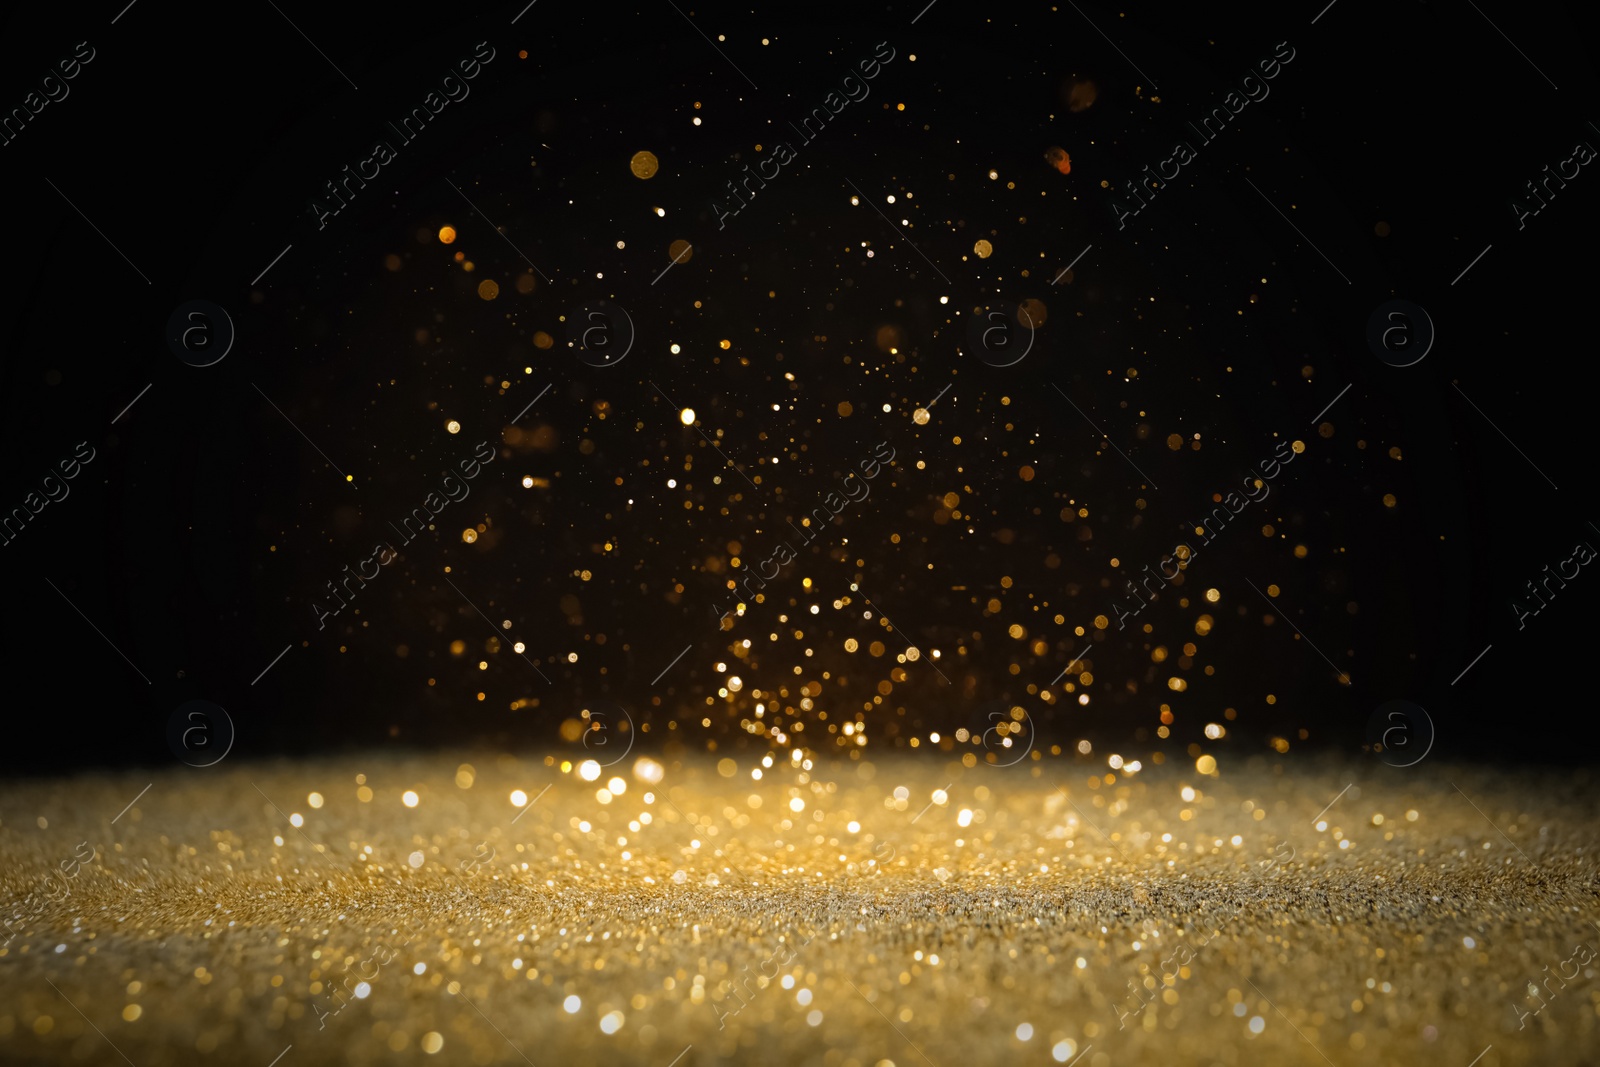 Photo of Shiny golden glitter falling down on black background. Bokeh effect